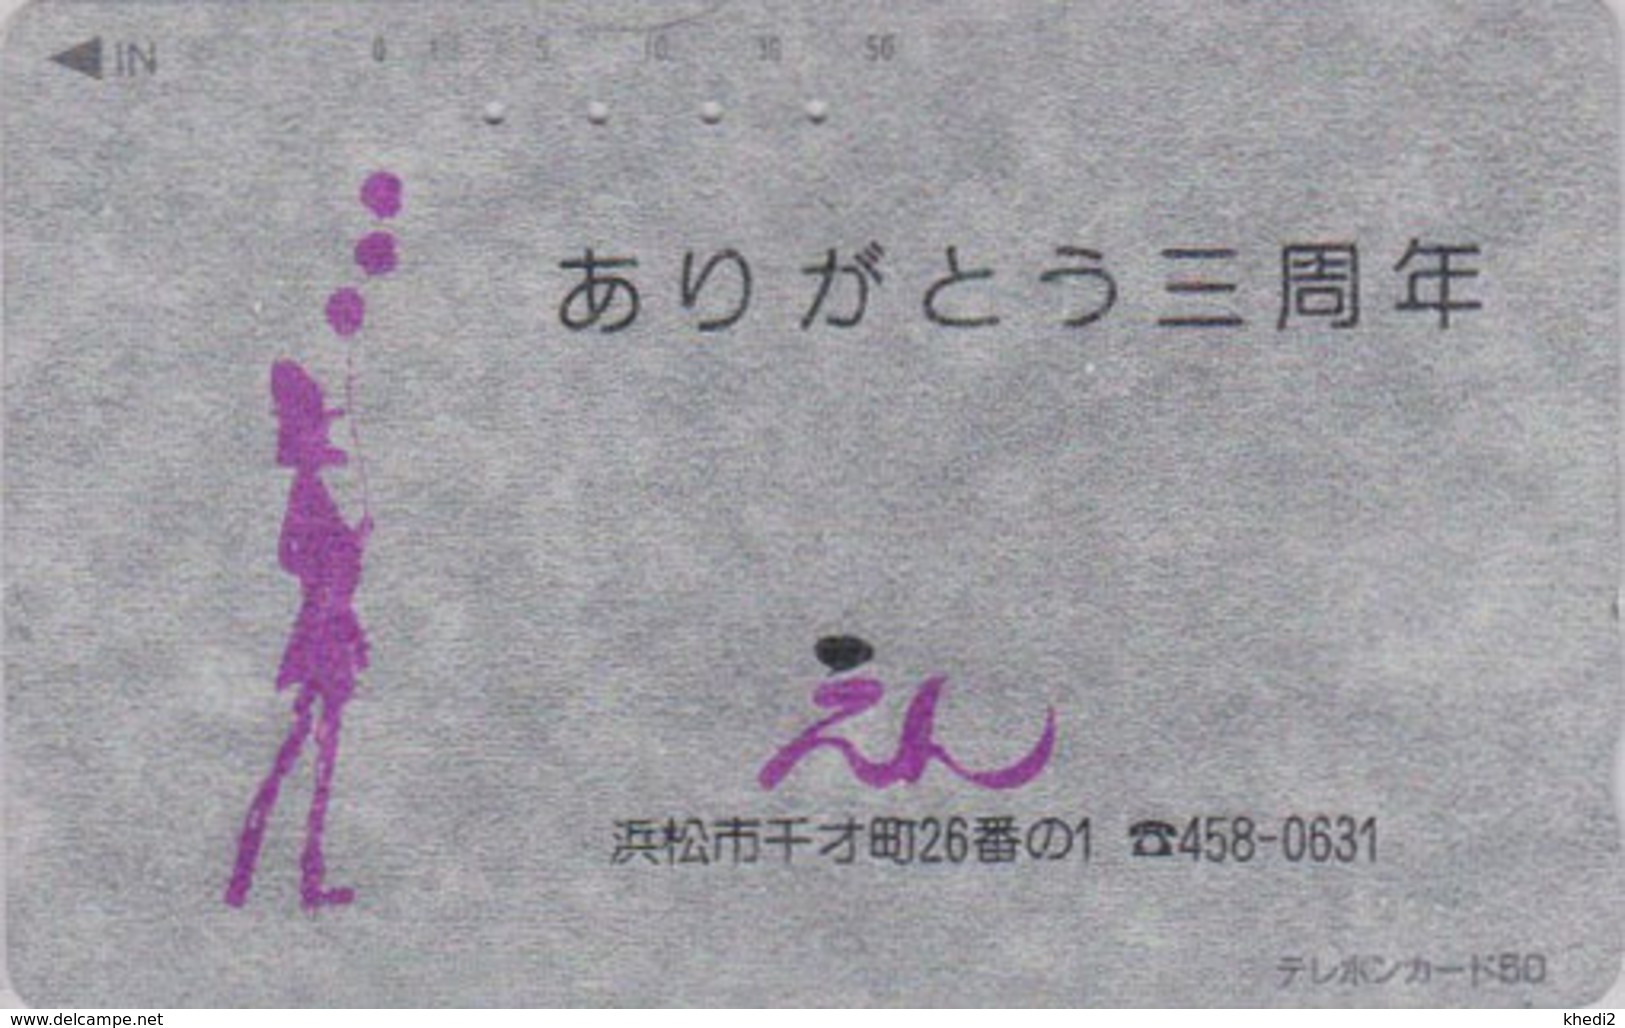 Télécarte ARGENT Japon / 110-119 - Femme & Ballon - Girl & Balloon JAPAN SILVER Phonecard - MD 245 - Jeux